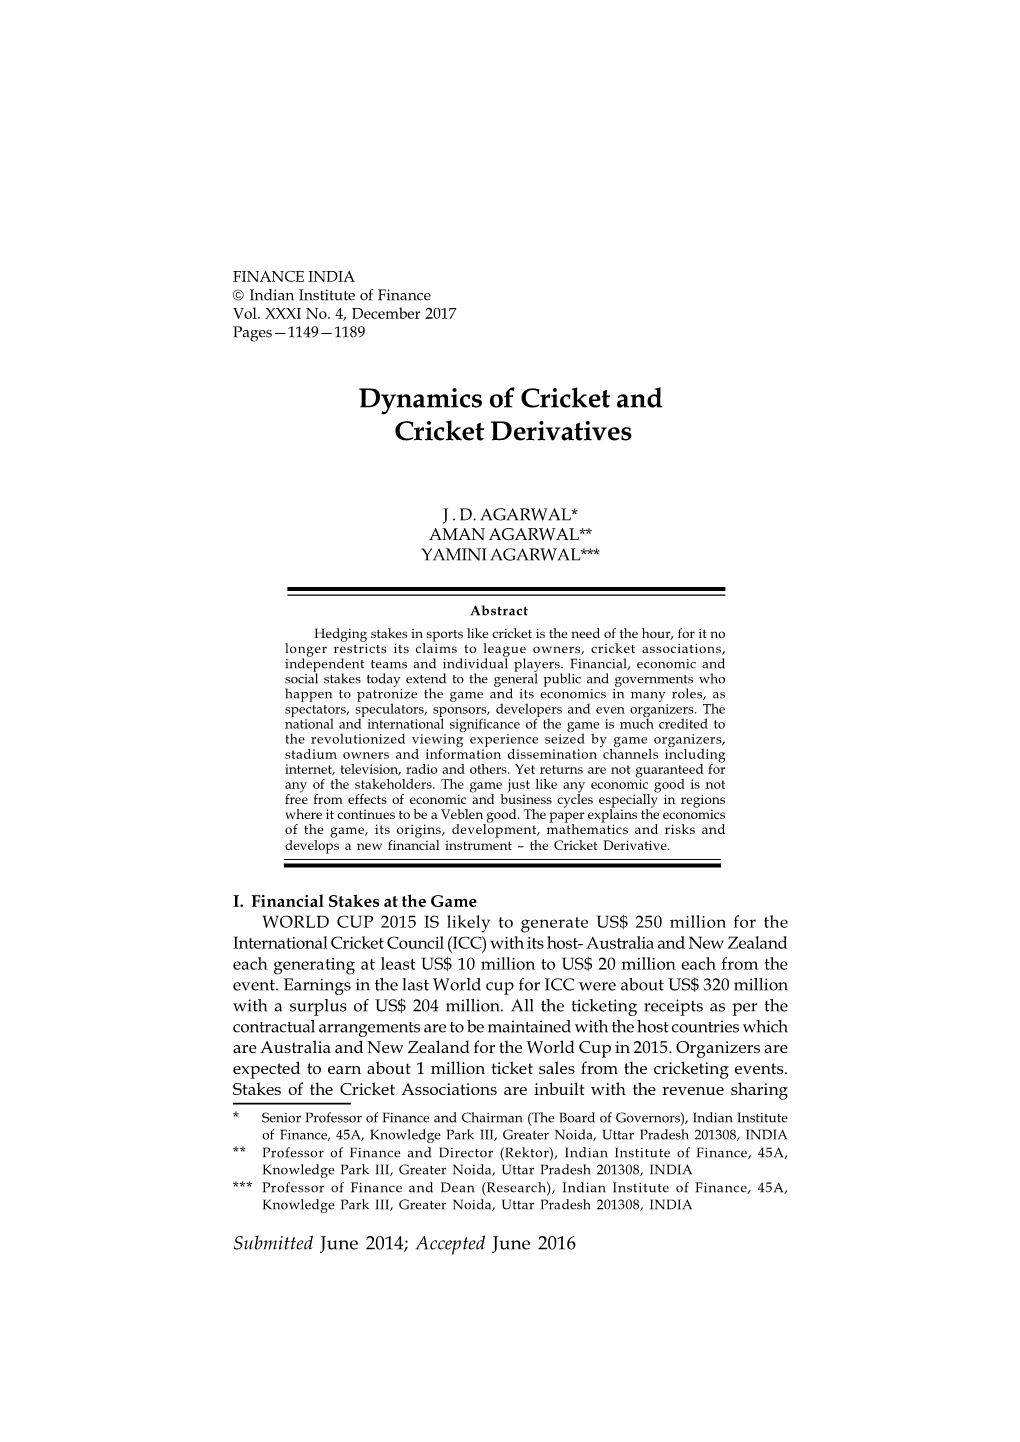 Dynamics of Cricket and Cricket Derivatives